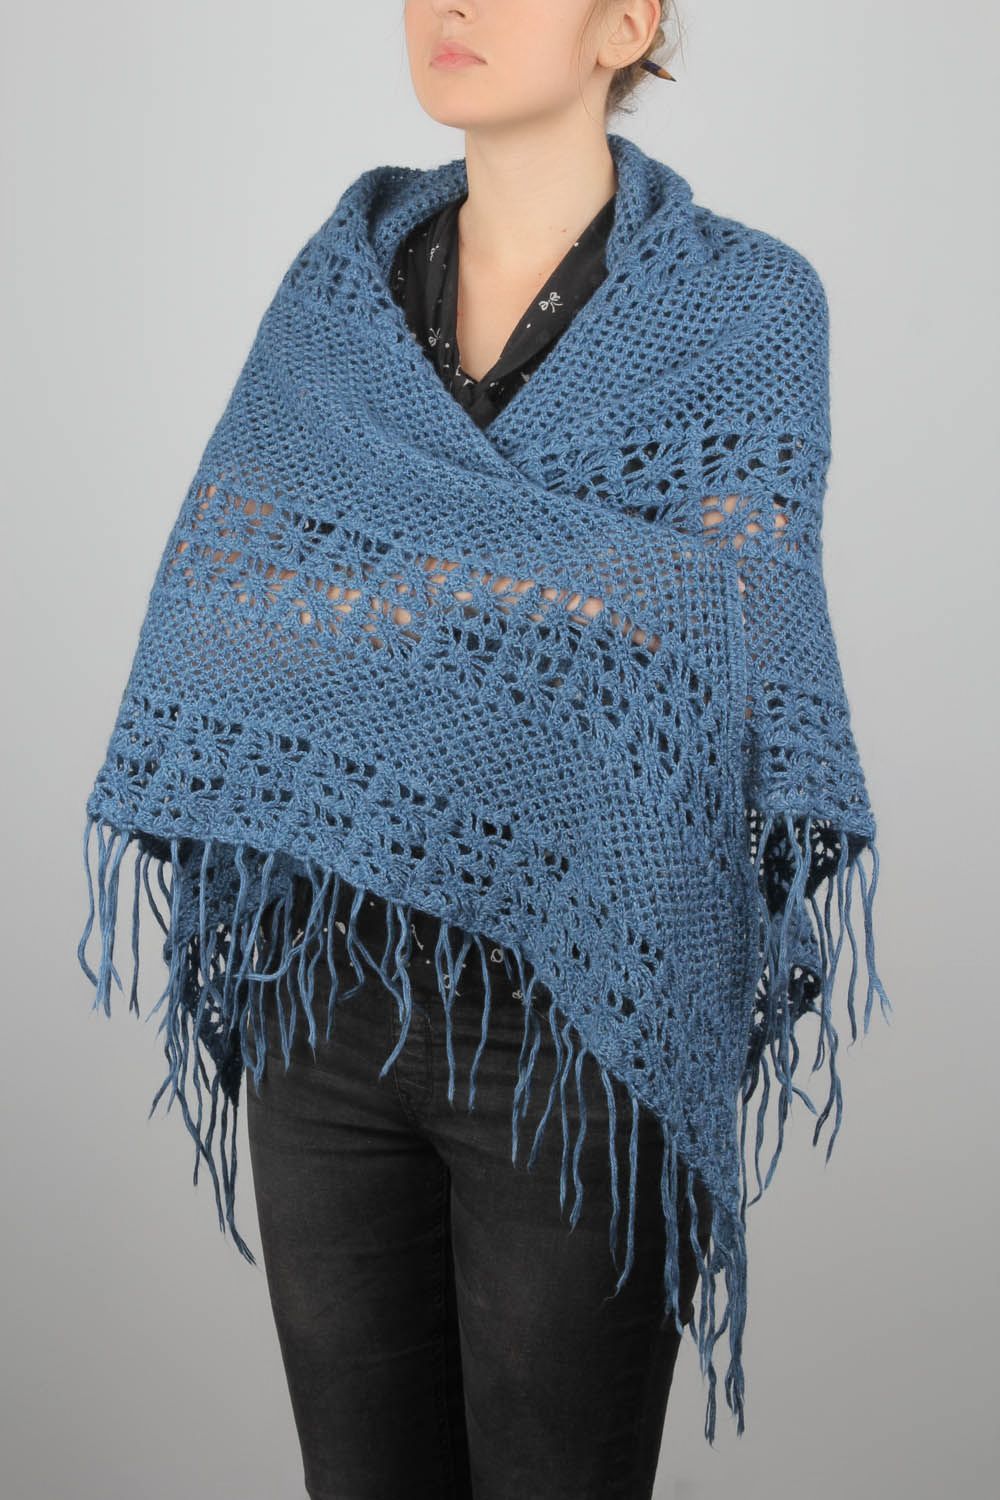 Crocheted woolen cape photo 1